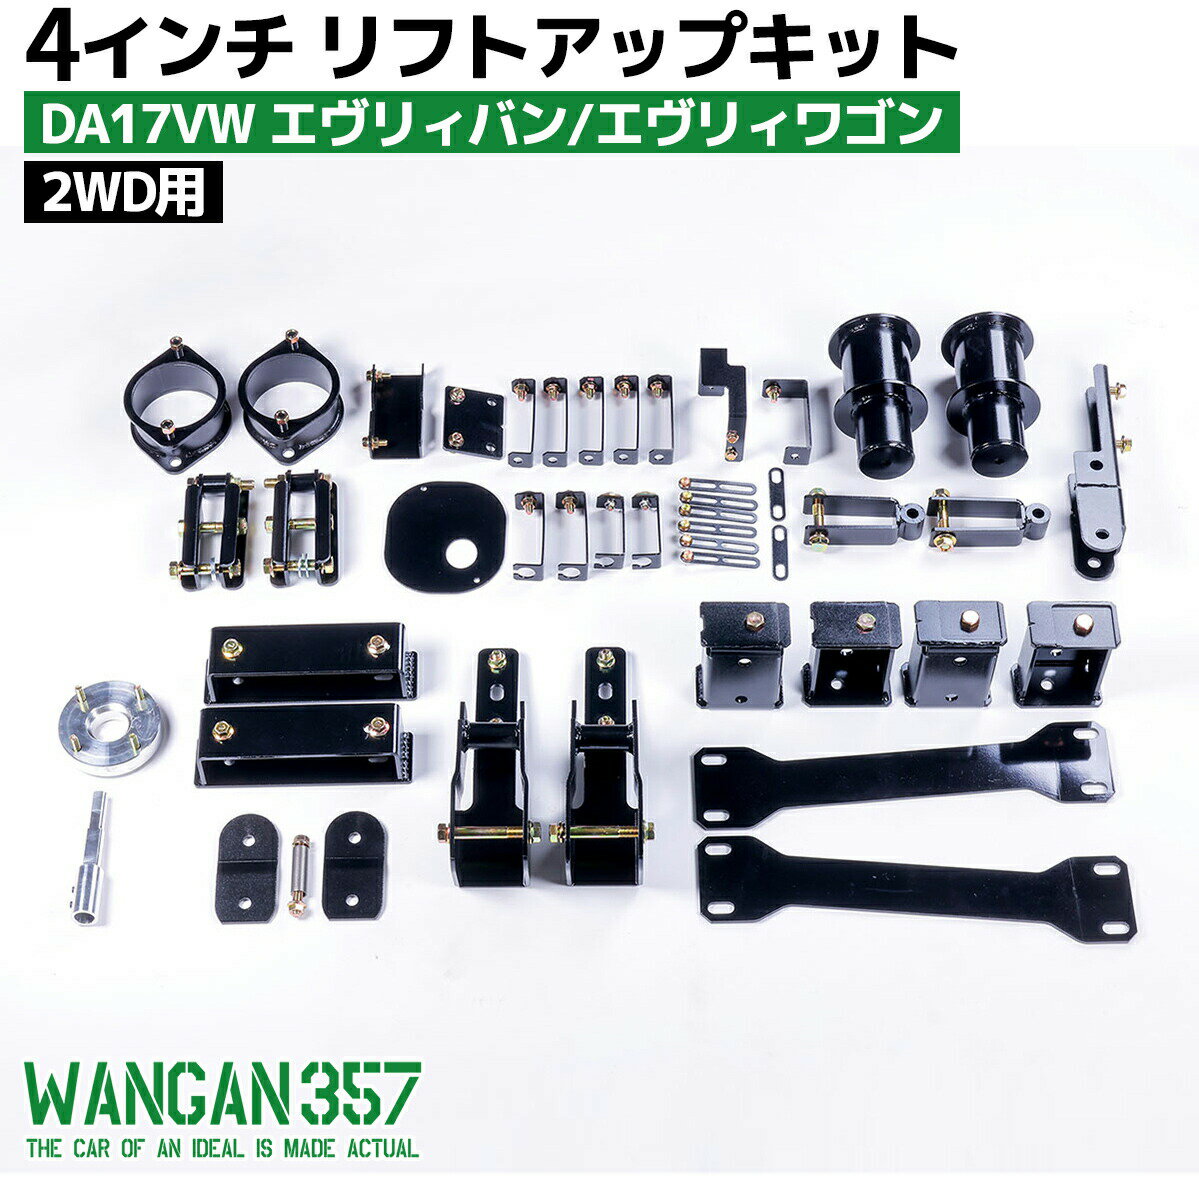 WANGAN357 DA17V DA17W エブリィ エブリー ワゴン バン 2WD 4インチ リフトアップ ブロックキット DR17 DS17 即納357A034